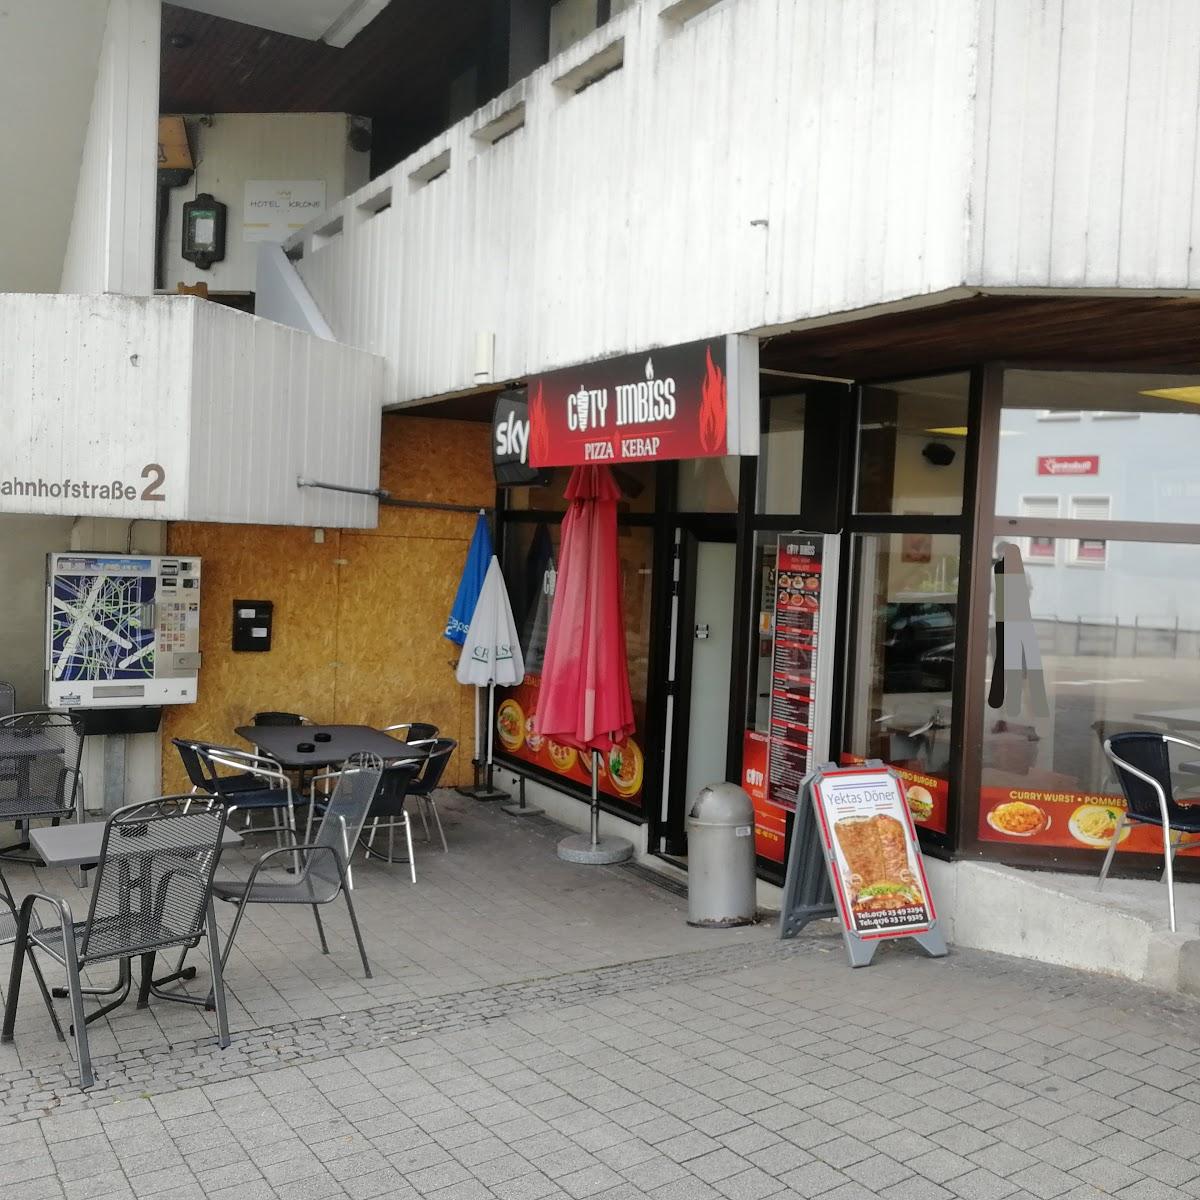 Restaurant "City Imbiss Pizza Kebap" in Bietigheim-Bissingen